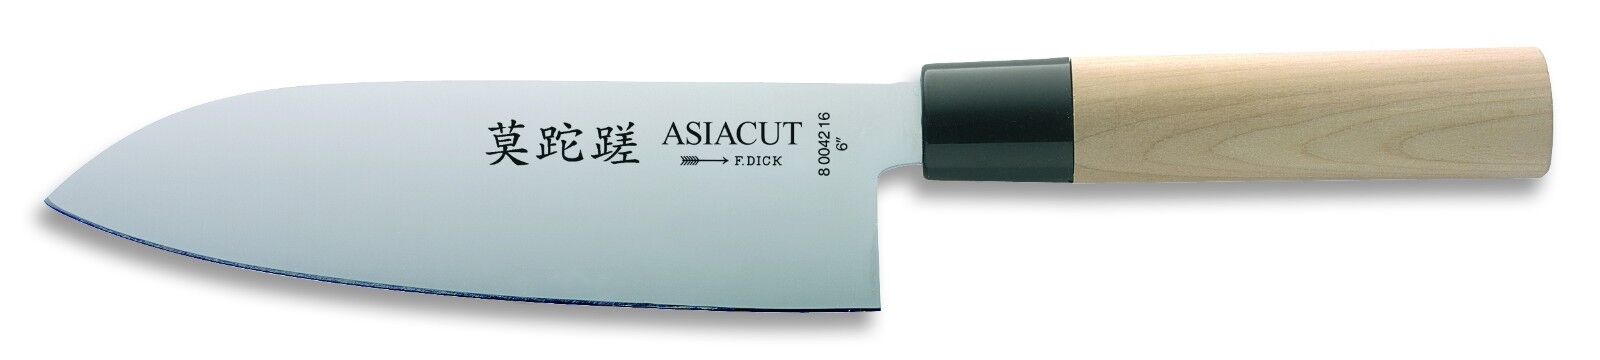 F. Dick (8004216) 6" Santoku, Utility Knife - ASIACUT-cityfoodequipment.com